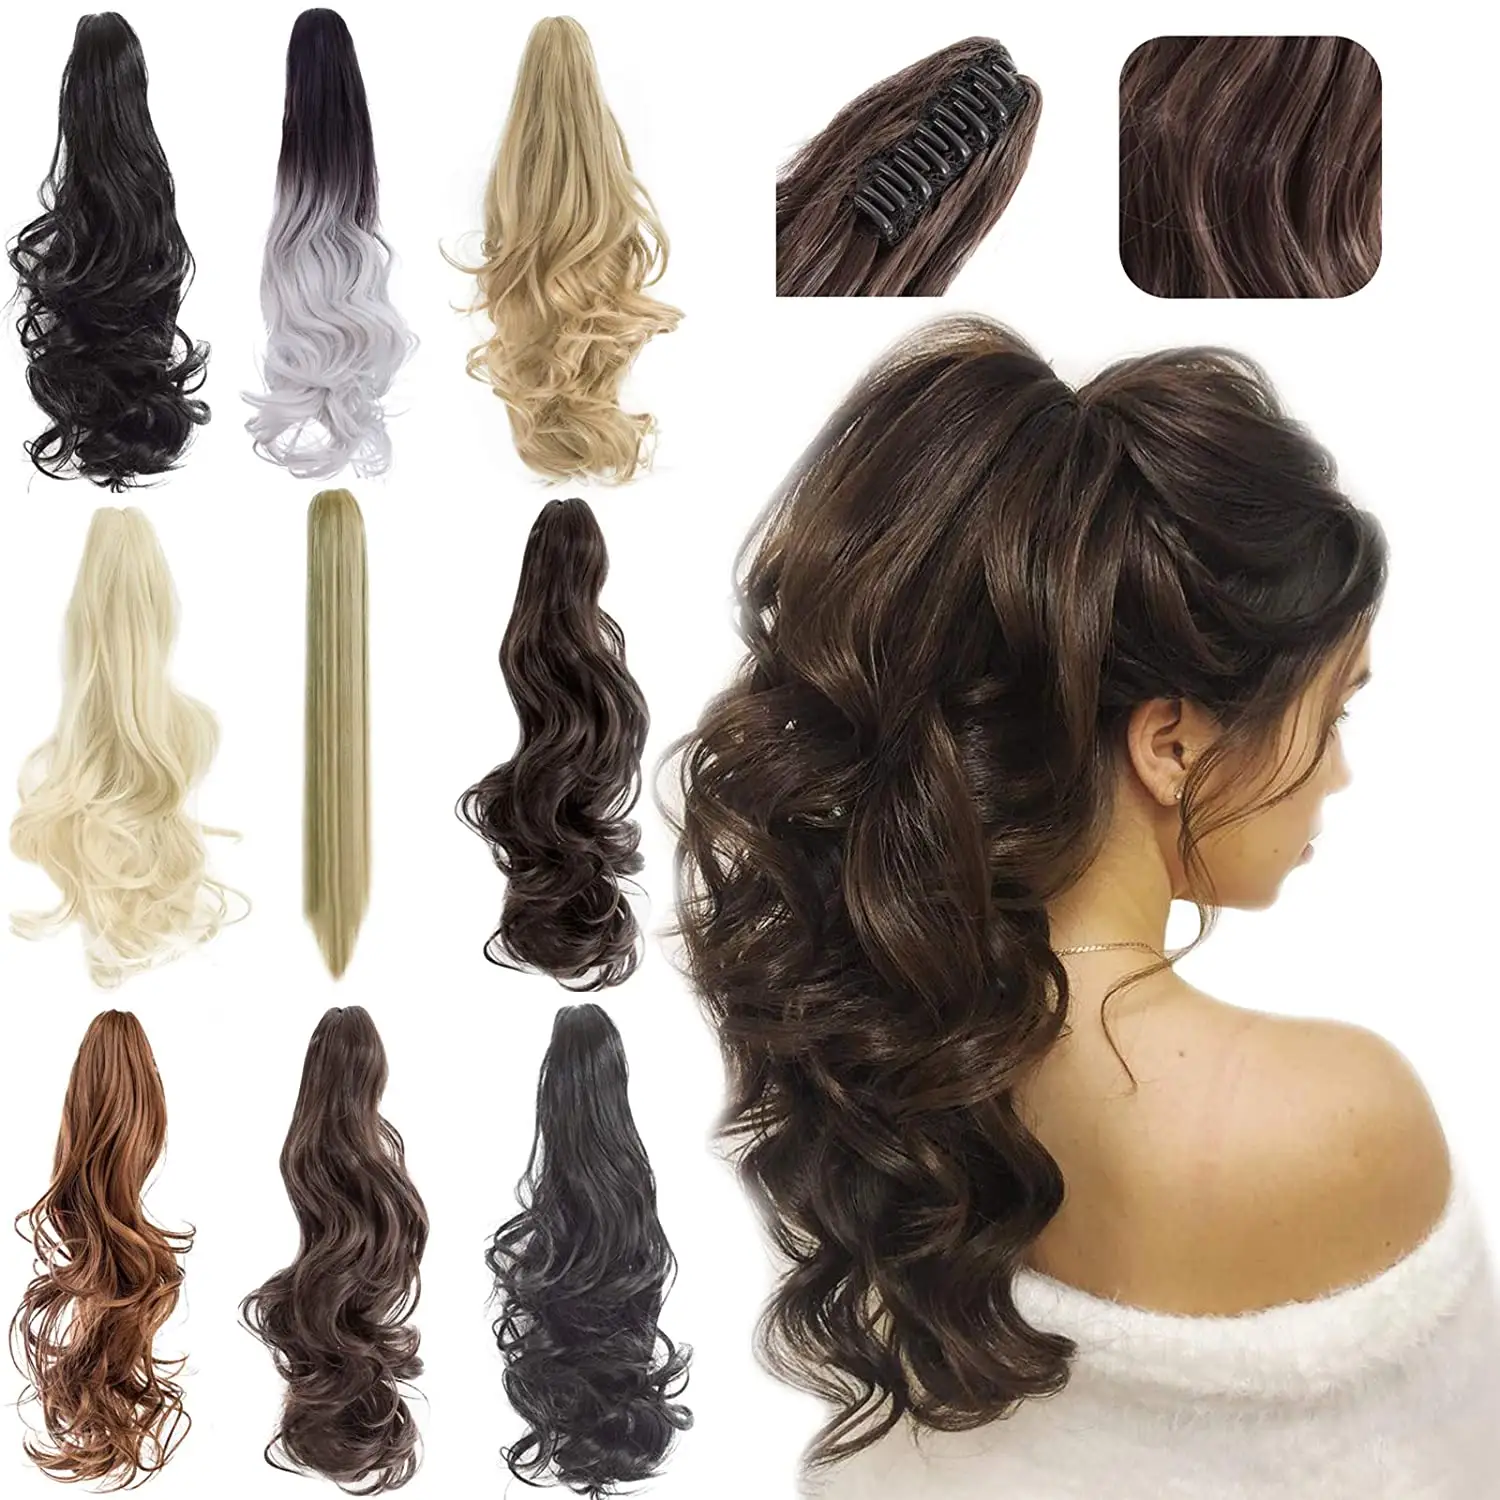 Extensión de cabello rizado para mujer, coleta con Clip de 8-30 pulgadas, color marrón, fácil de usar, coleta